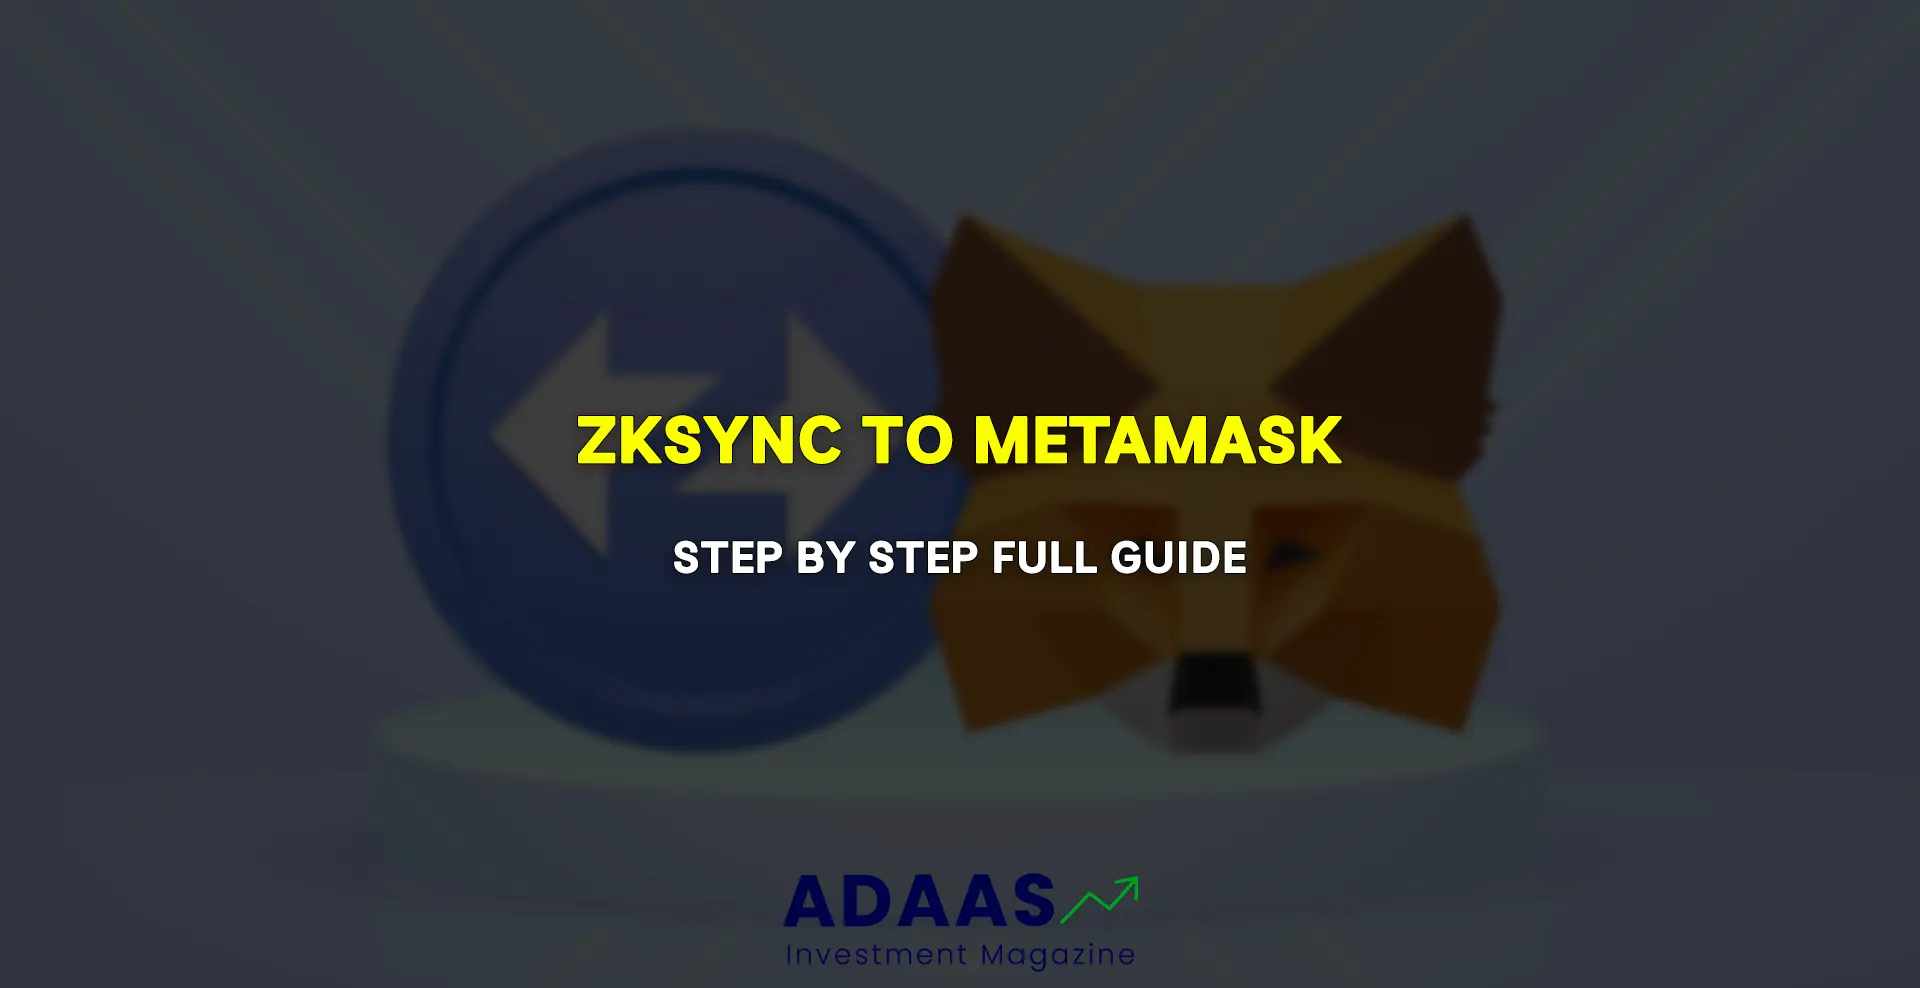 How does Metamask work?